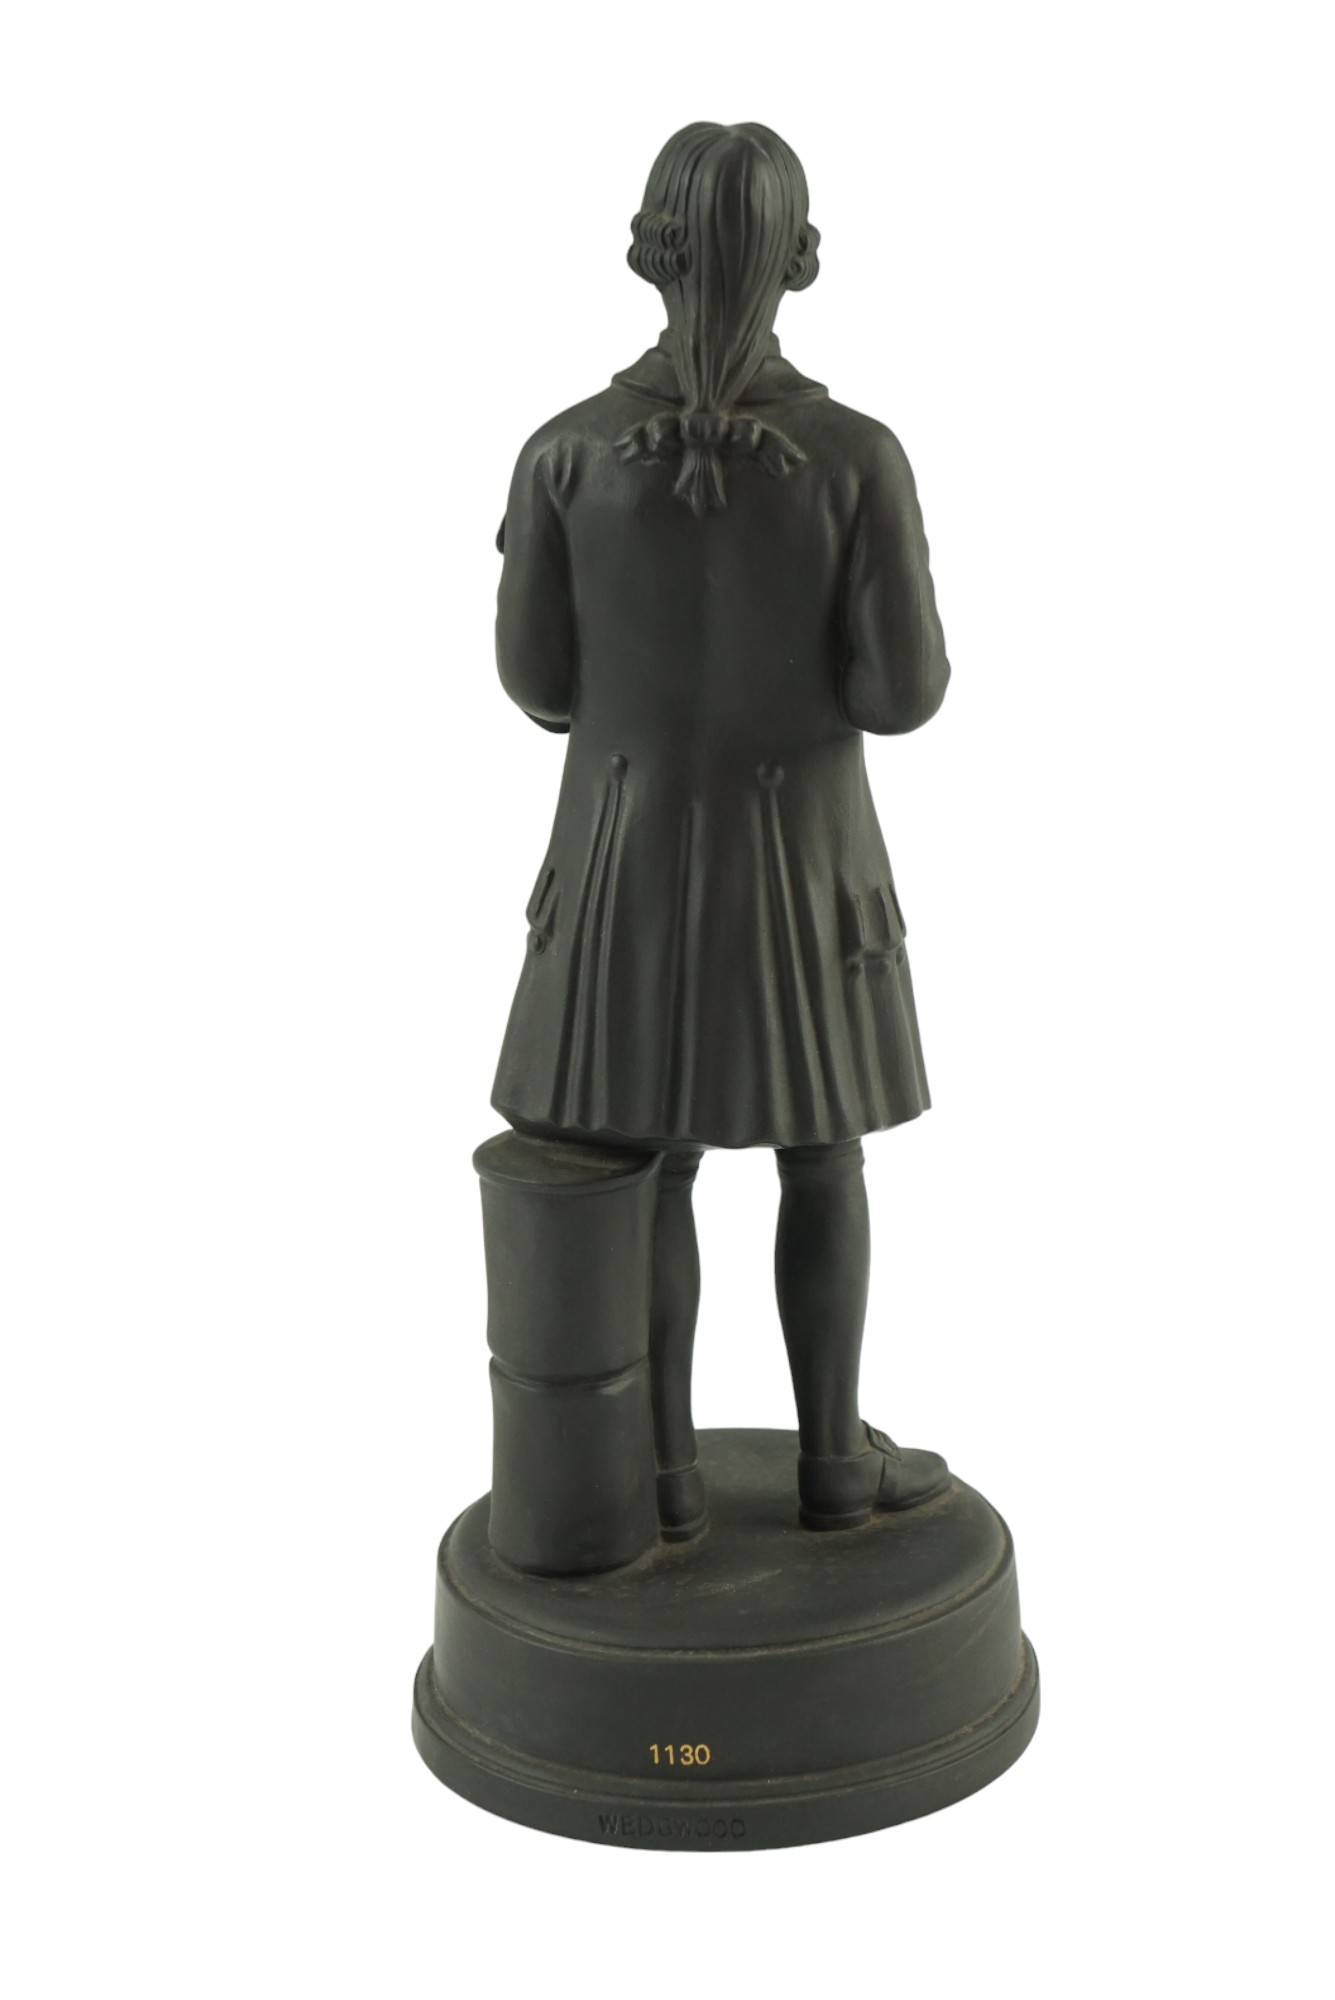 A Josiah Wedgwood black basalt figurine, height 22 cm - Image 2 of 2